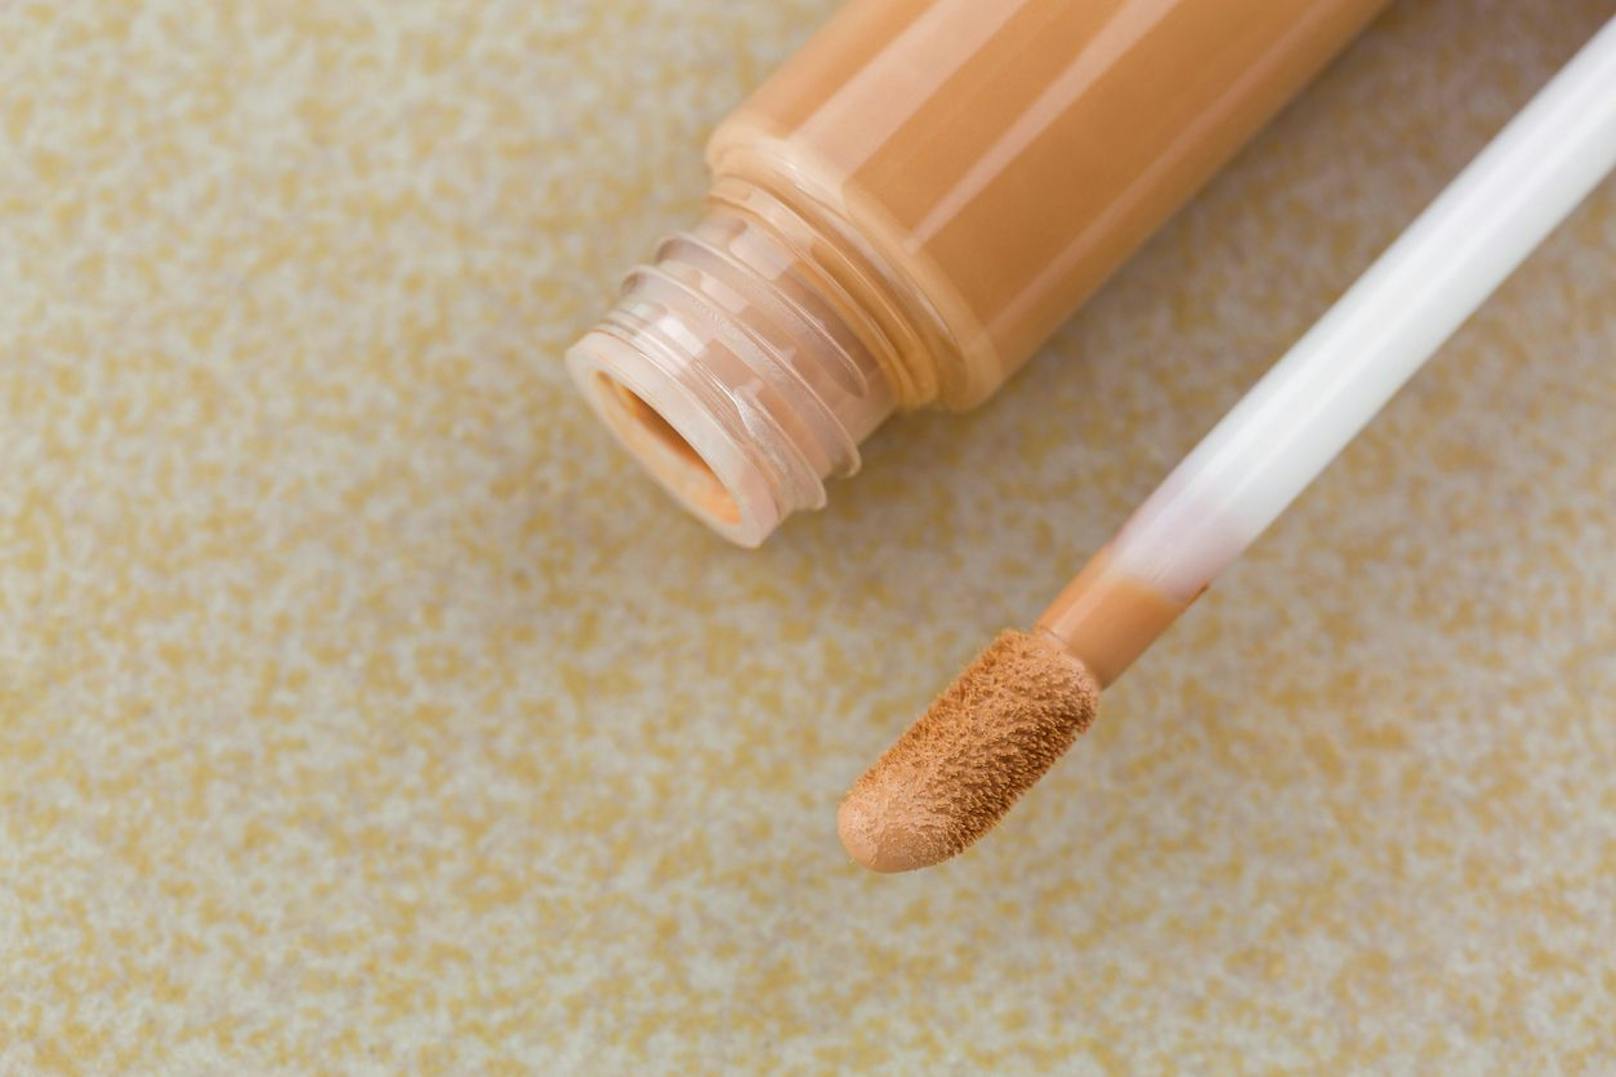 Rückruf! Beliebtes Make-up-Produkt mit Keimen belastet